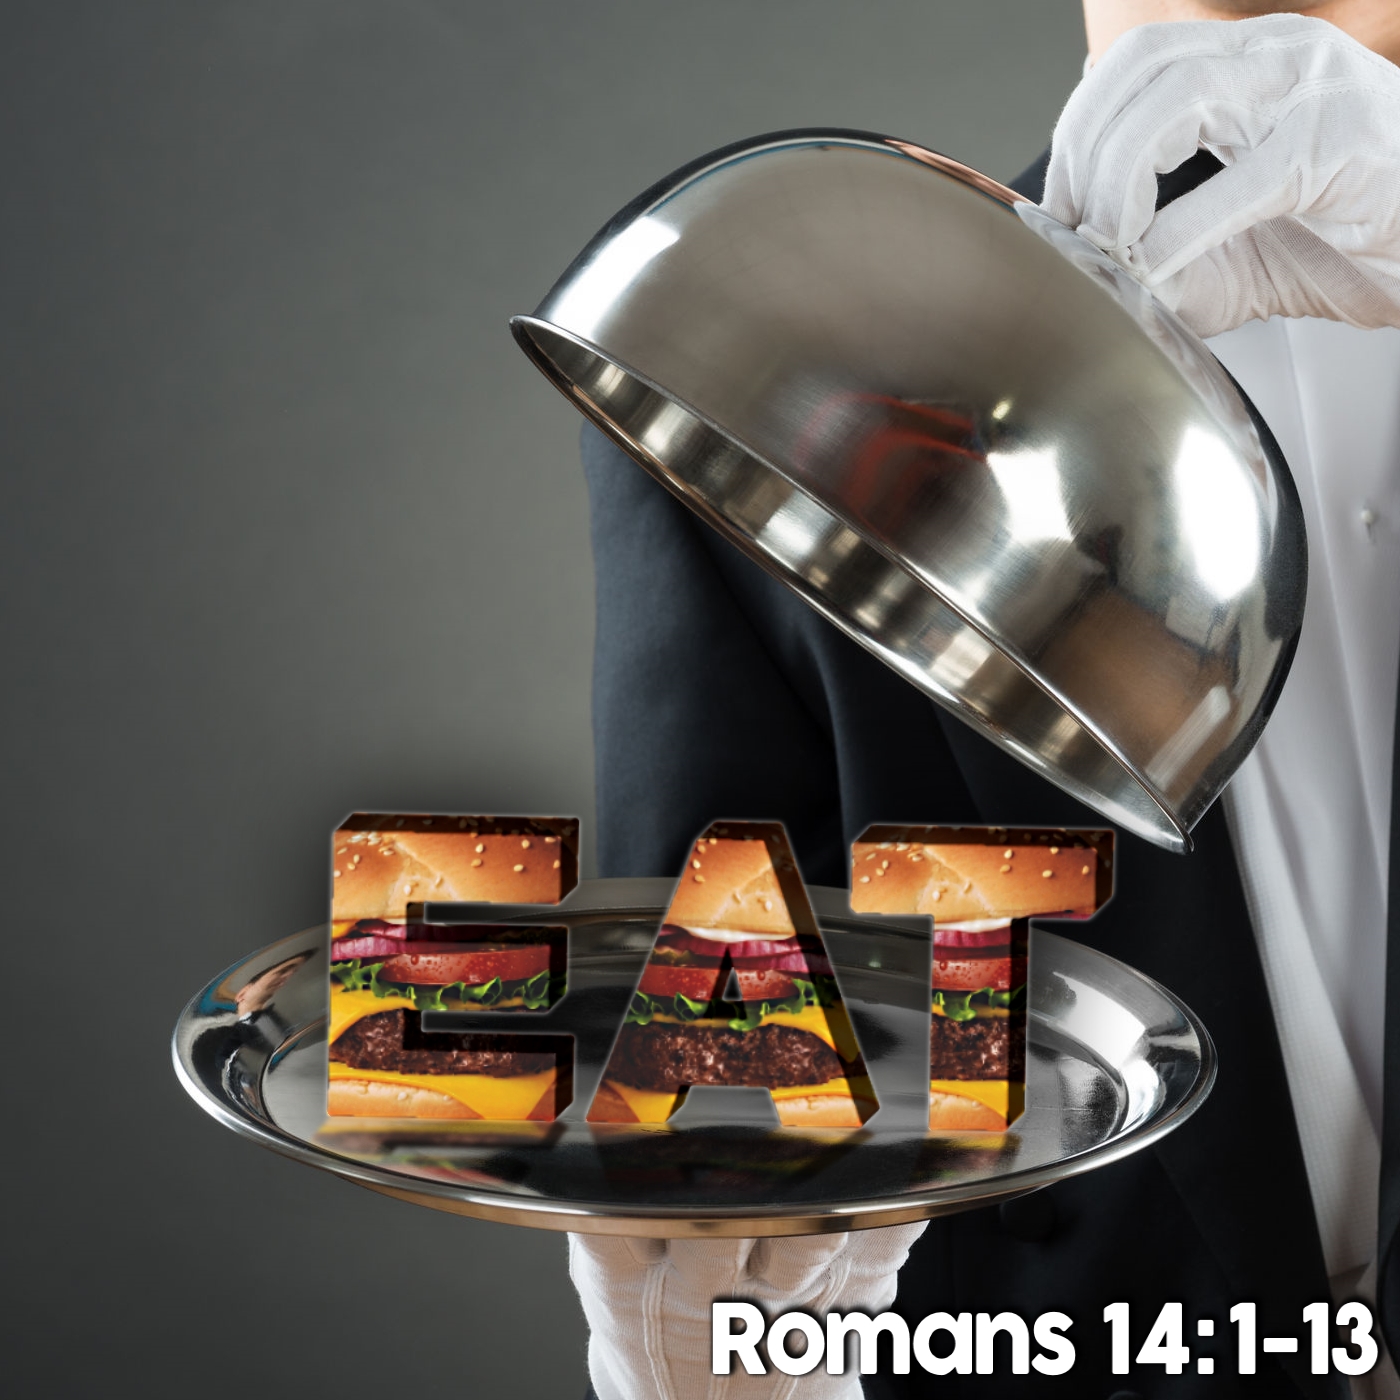 Romans 14:1-13 